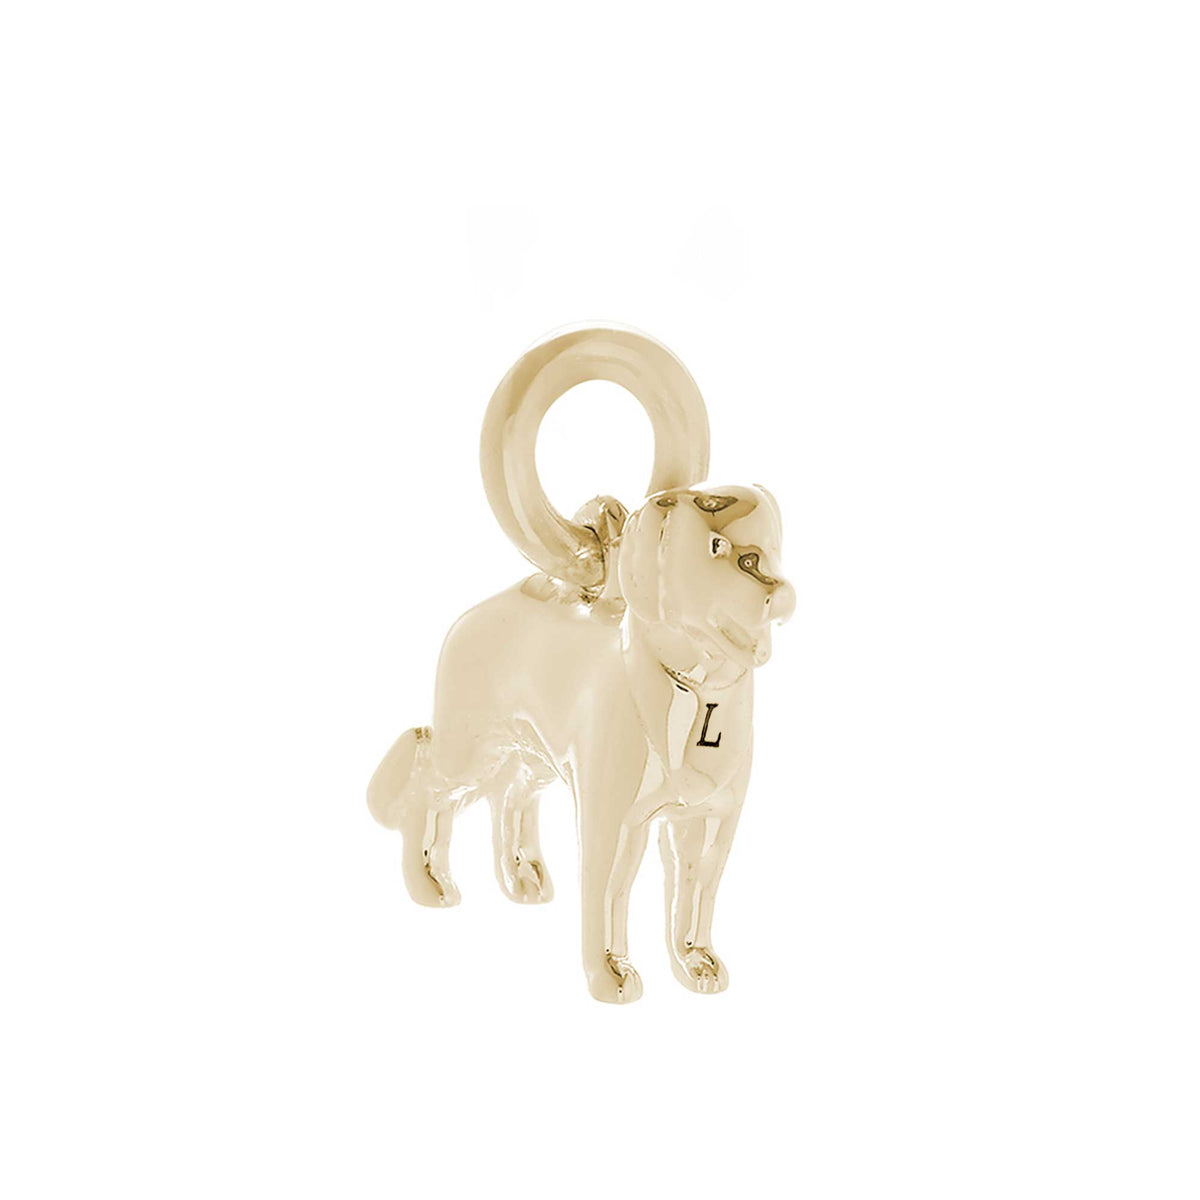 Golden Retriever Solid Gold Dog Charm